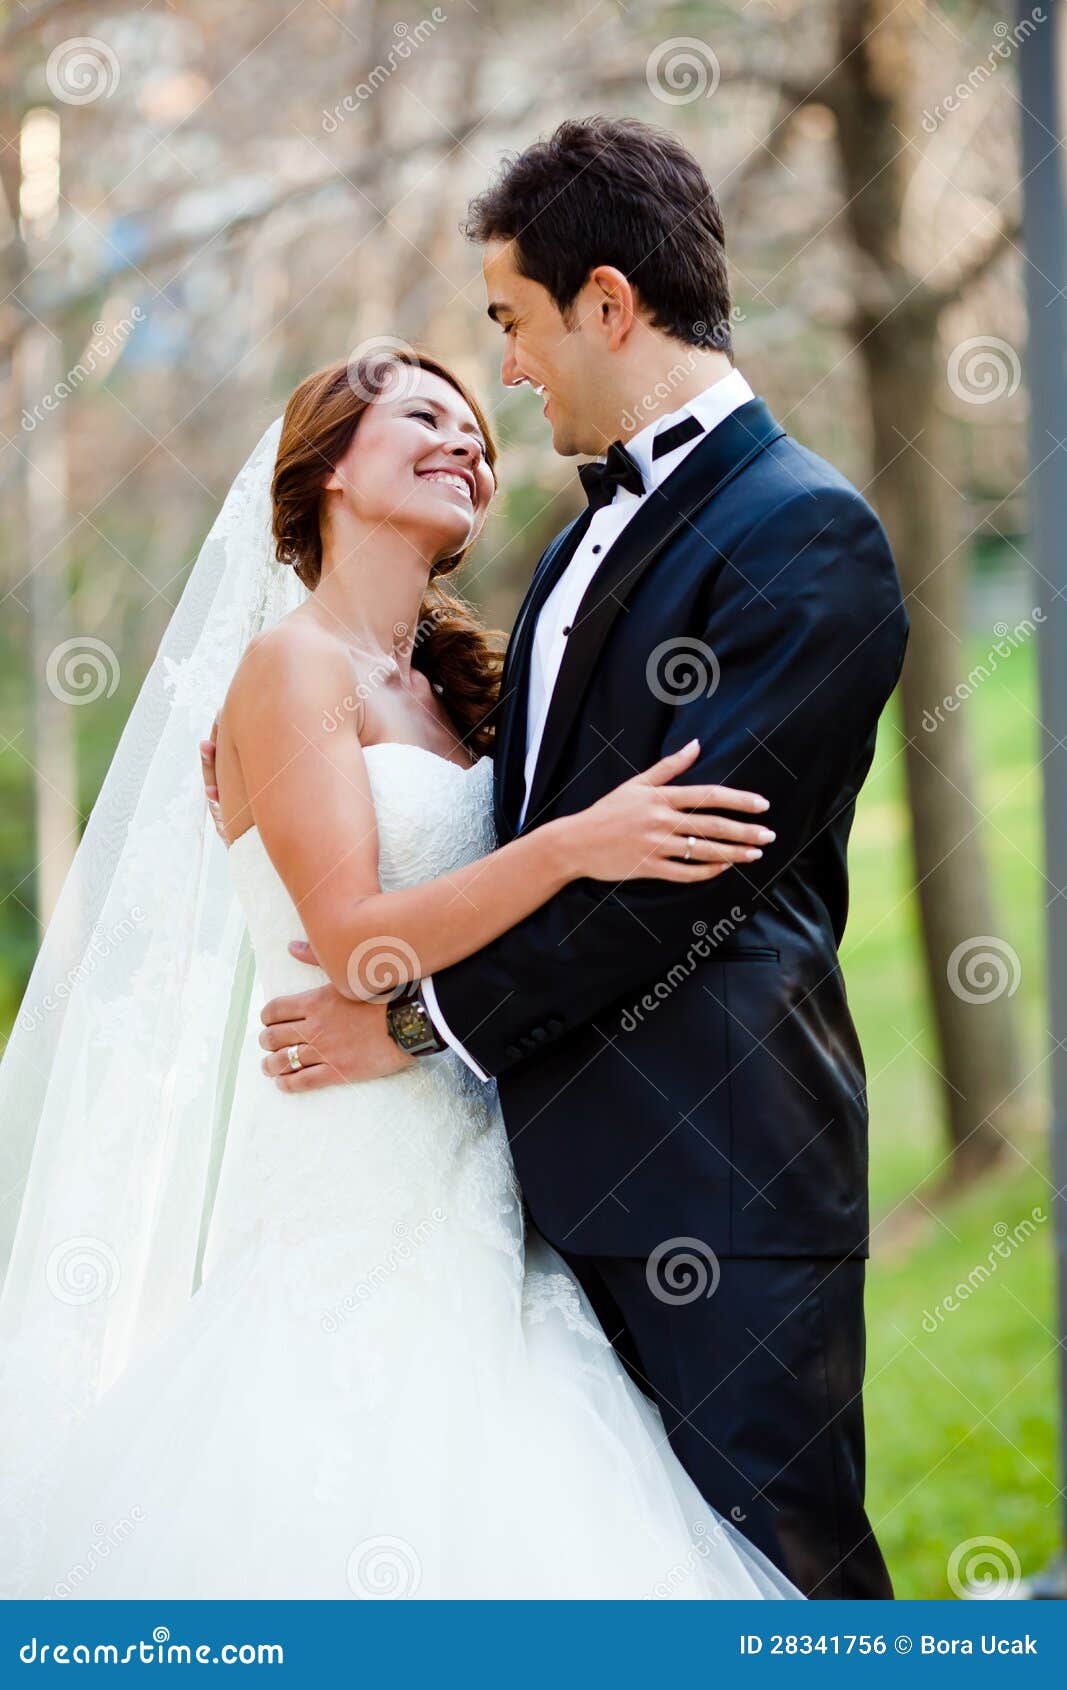 https://thumbs.dreamstime.com/z/happy-wedding-couple-28341756.jpg